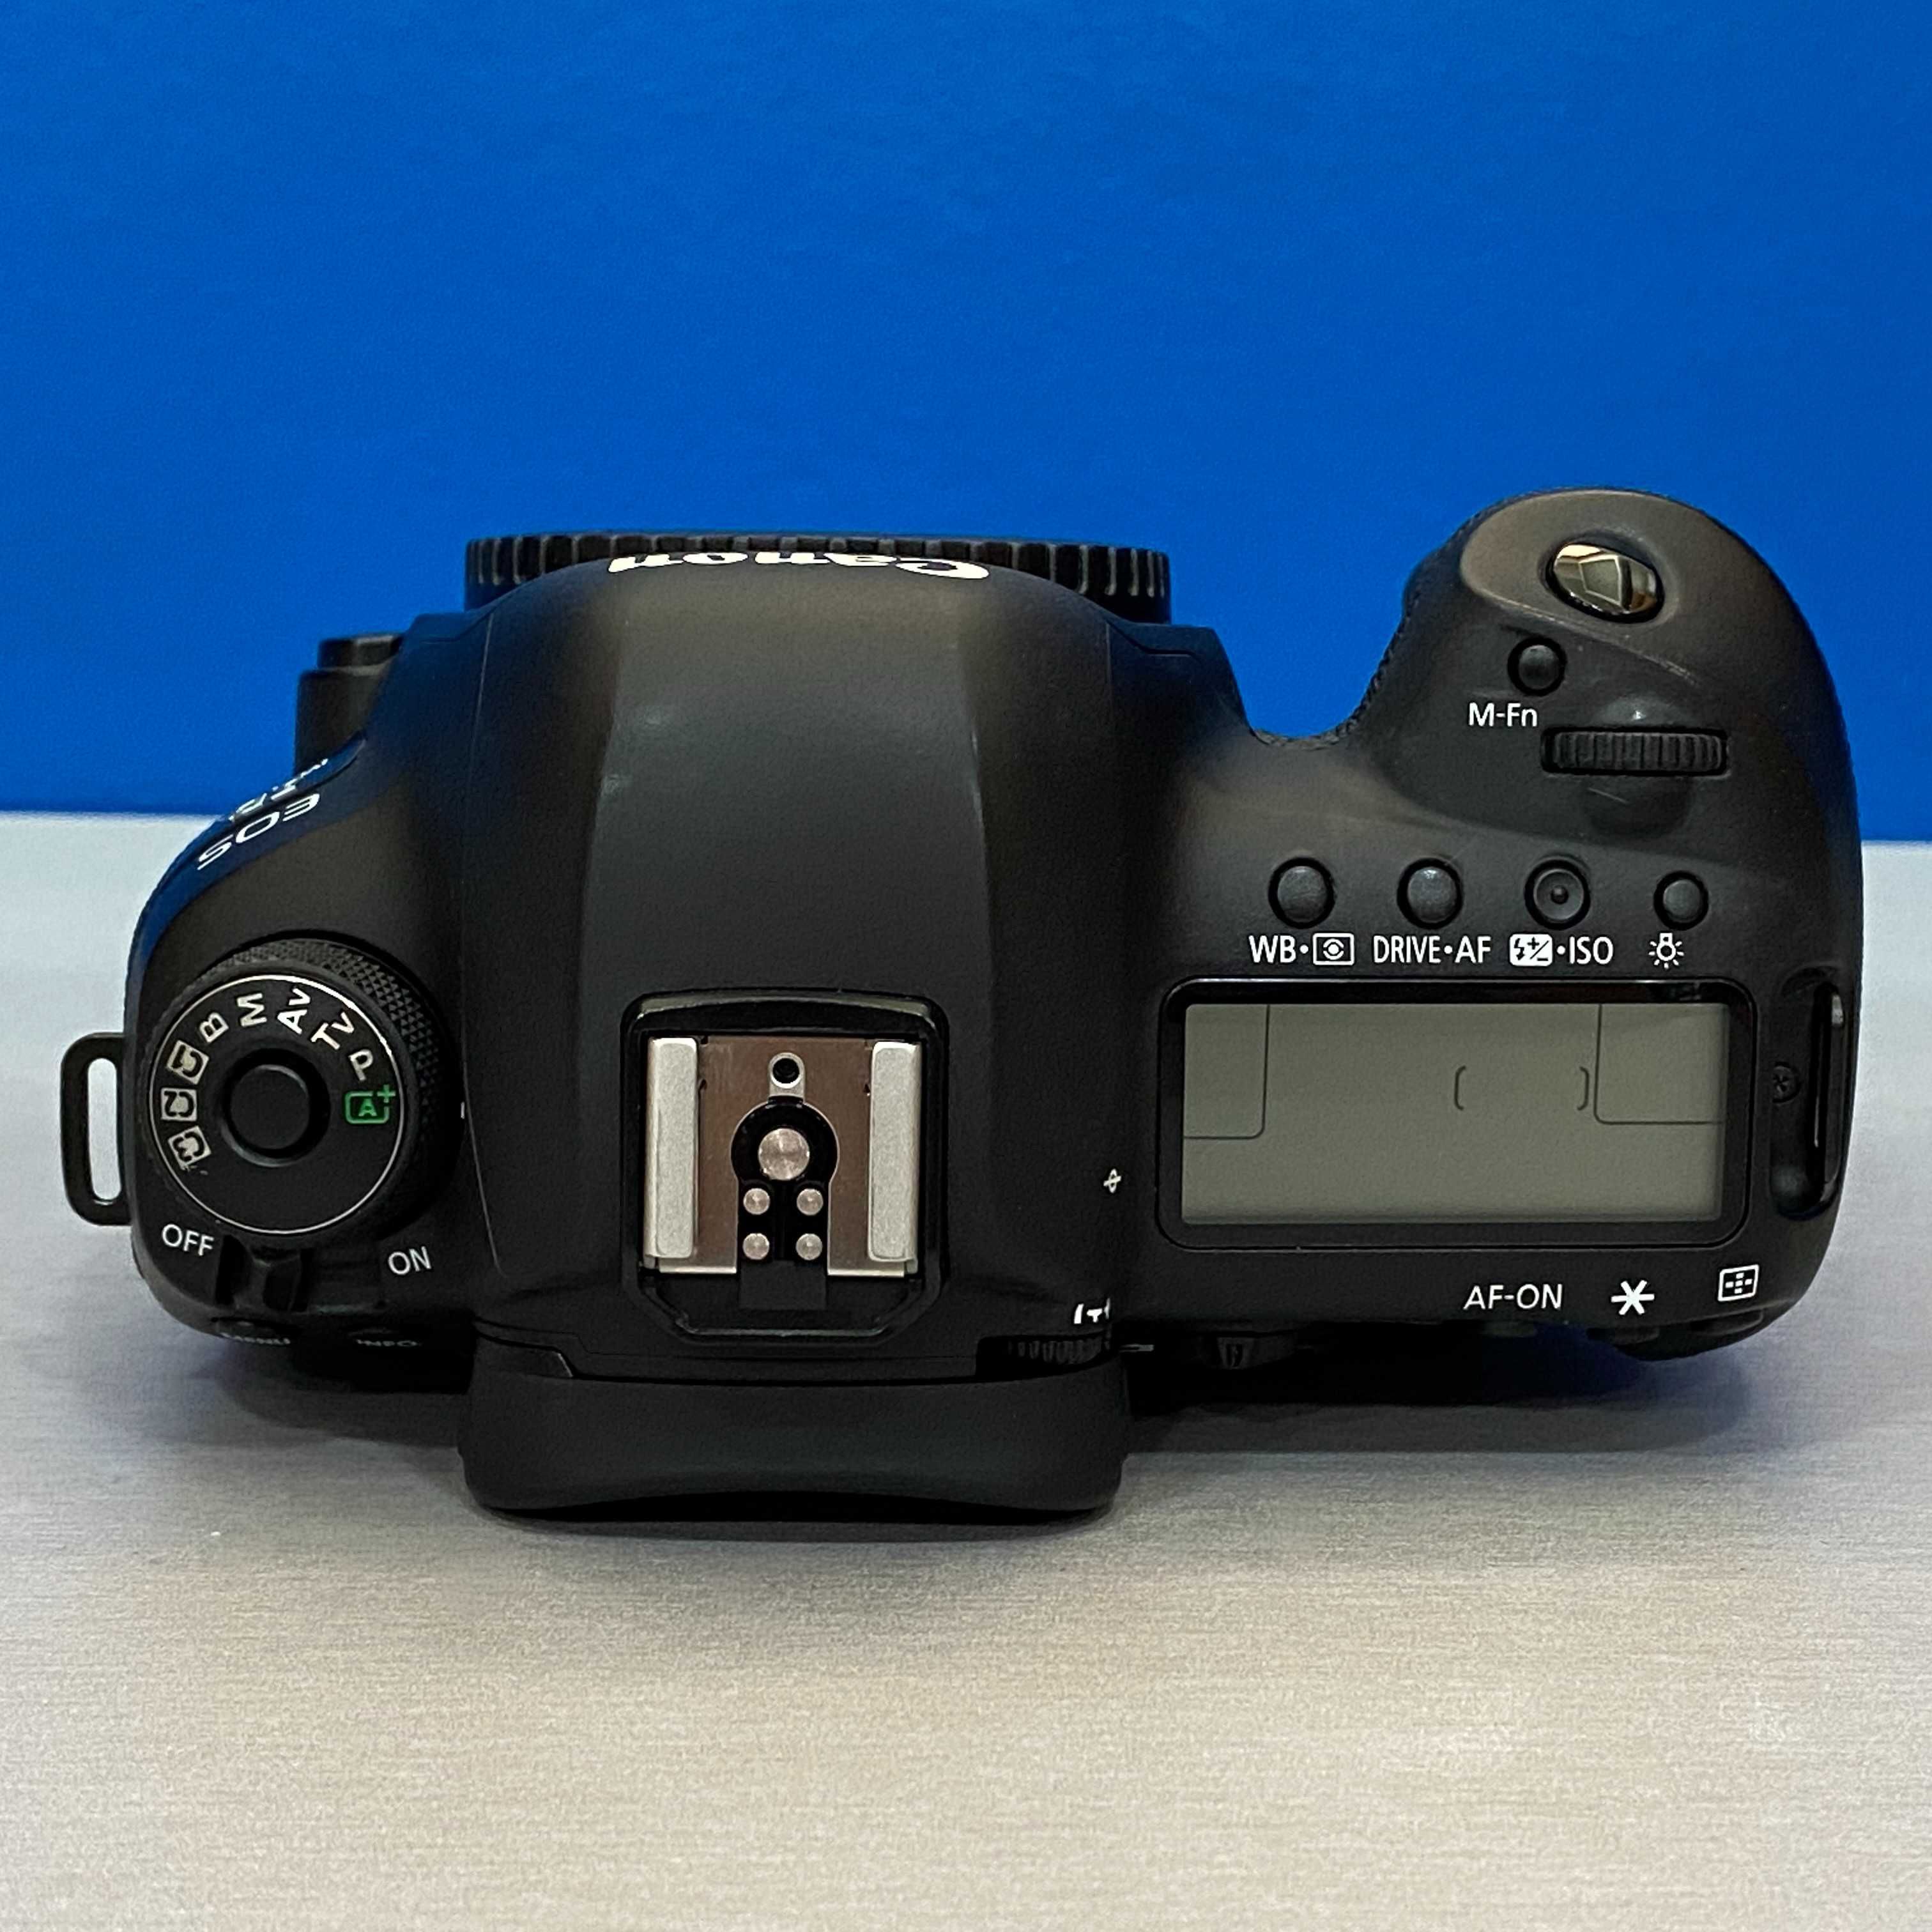 Canon EOS 5D Mark IV (Corpo) - 30.4MP